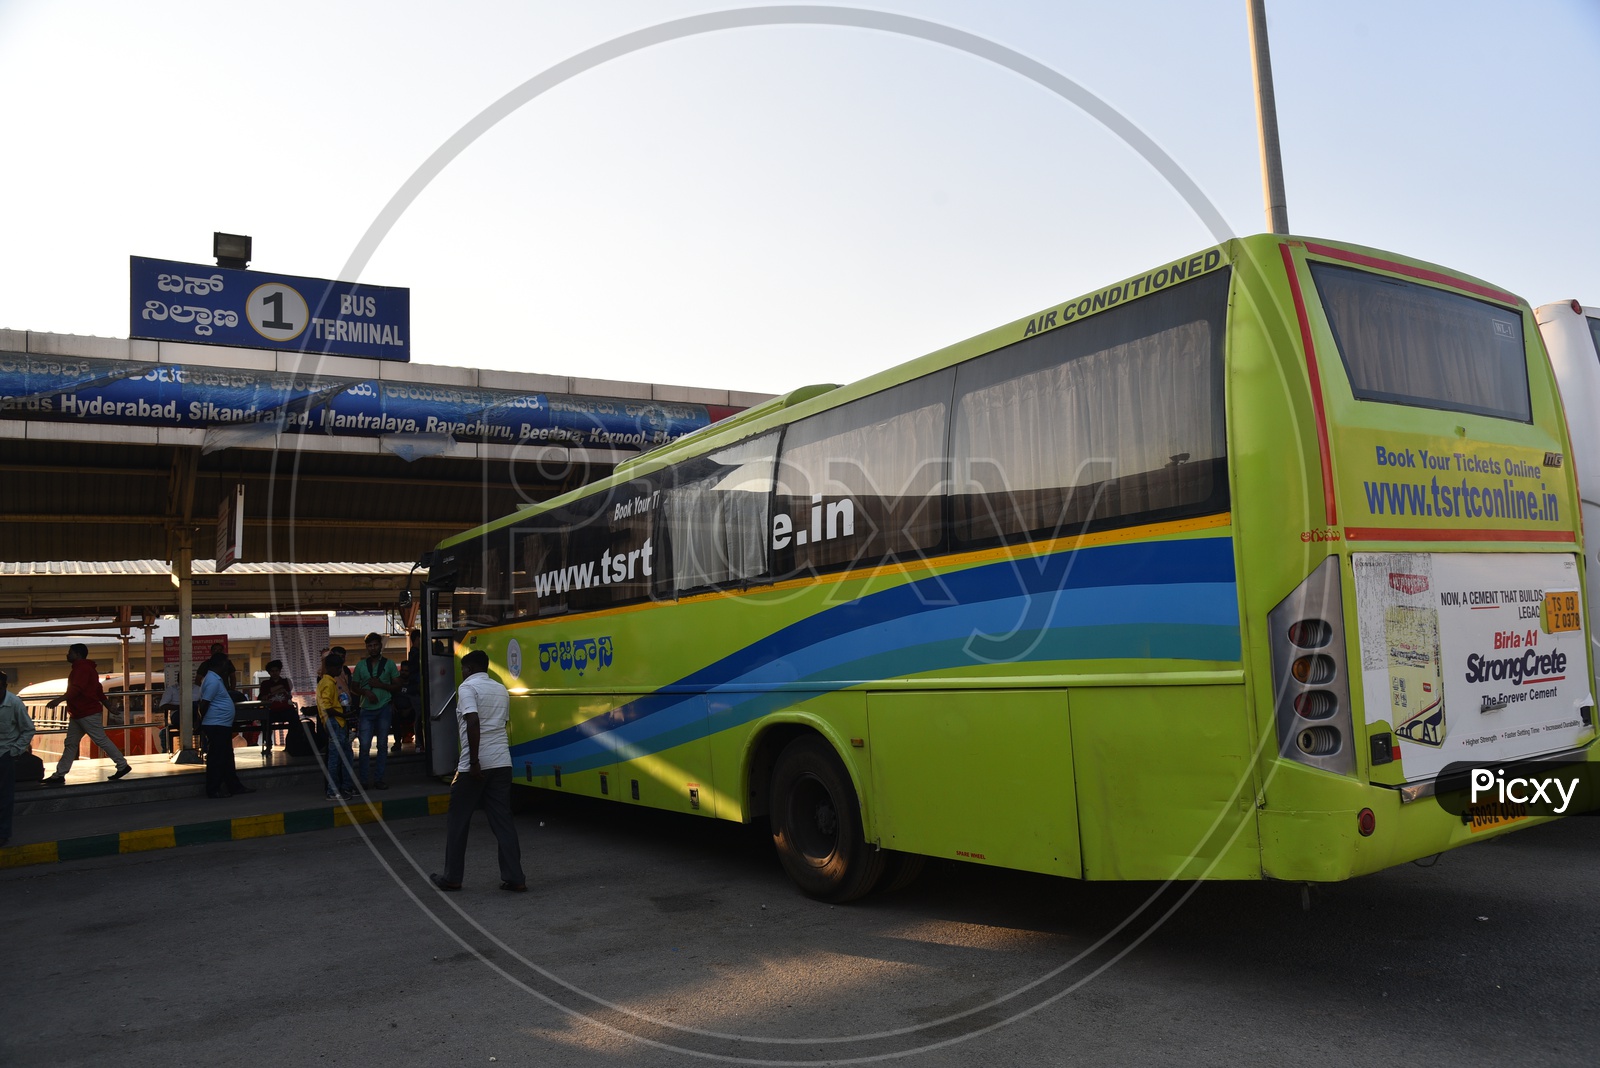 TSRTC bus at bus terminal 1 in Majestic bus station, Bangalore